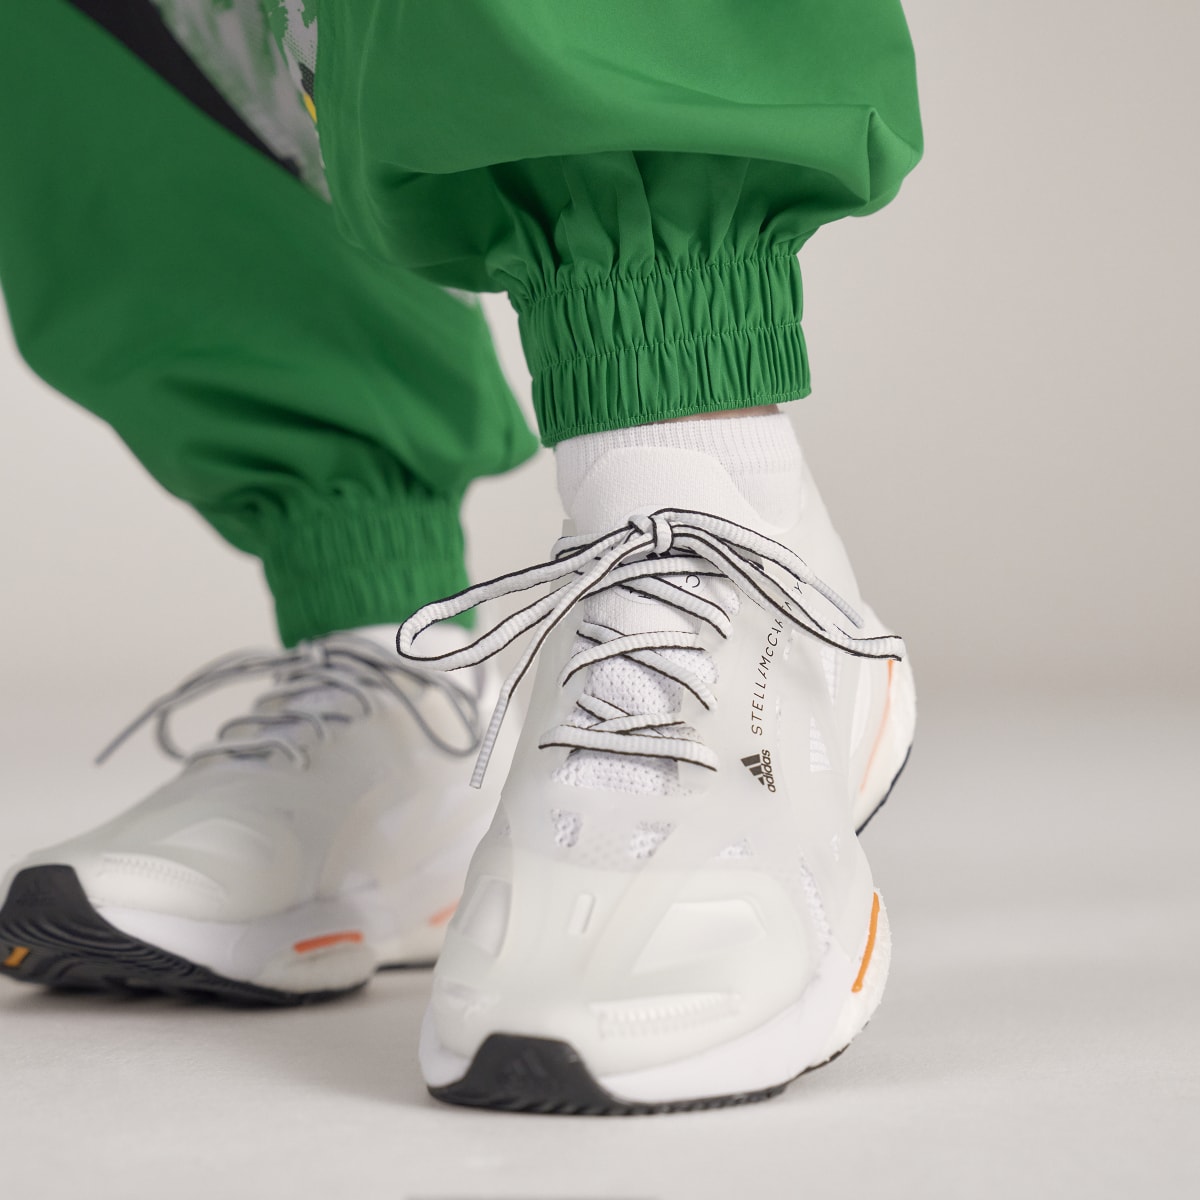 Adidas by Stella McCartney Woven Track Pants. 12